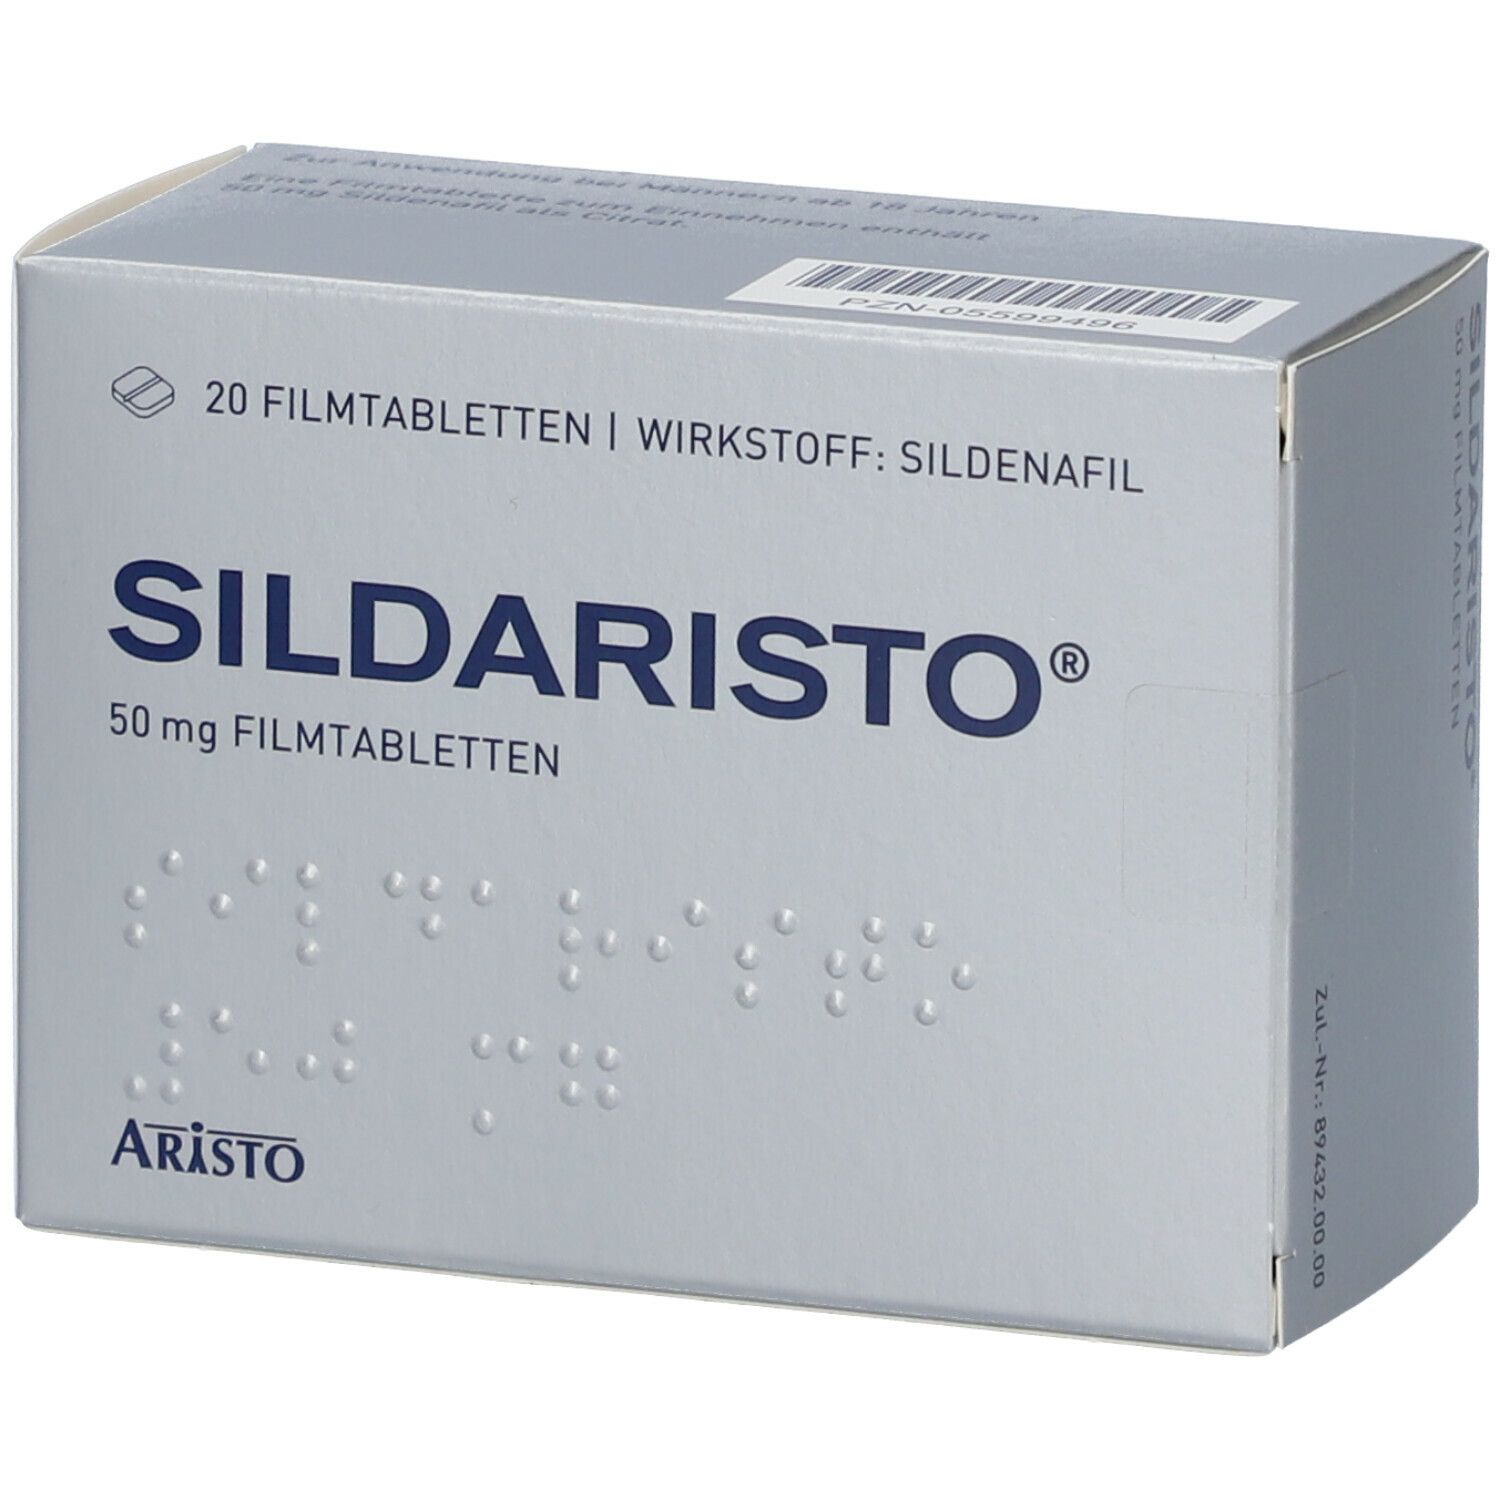 SILDARISTO® 50 mg